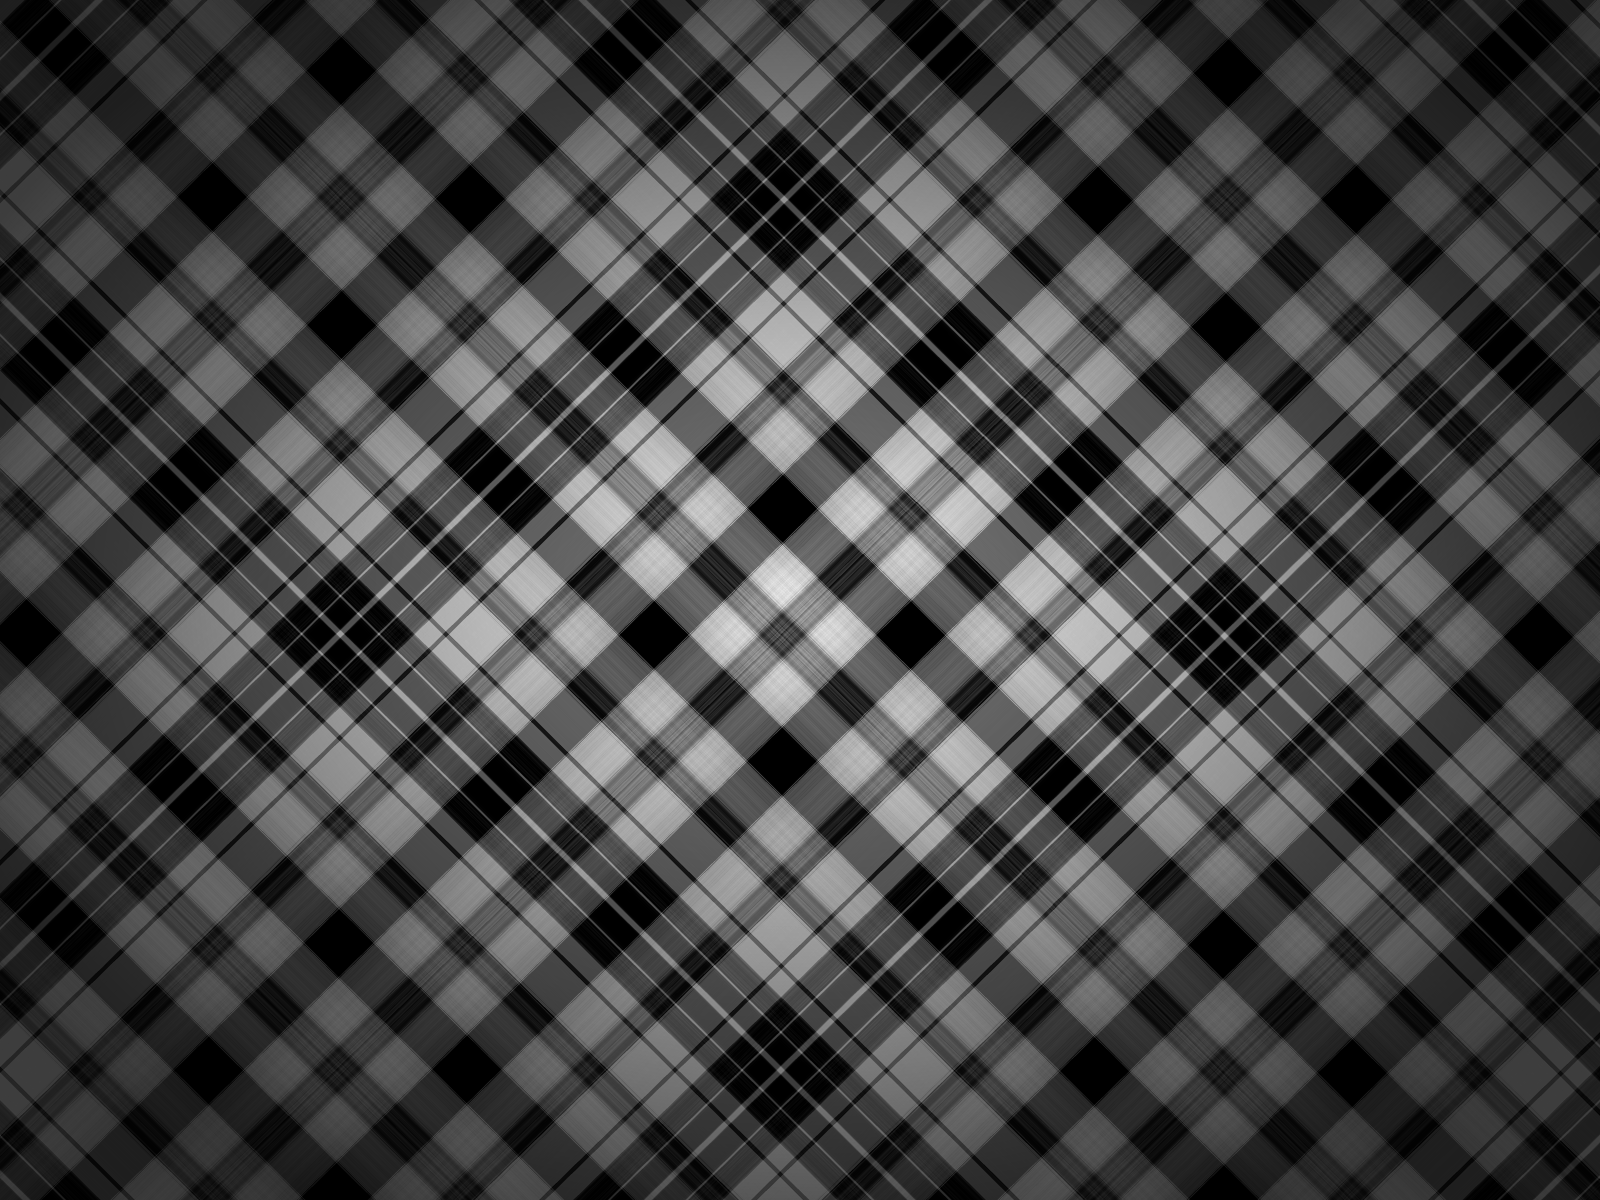 iPhone wallpaper black pattern  Black and white wallpaper iphone Iphone wallpaper  pattern Phone wallpaper design